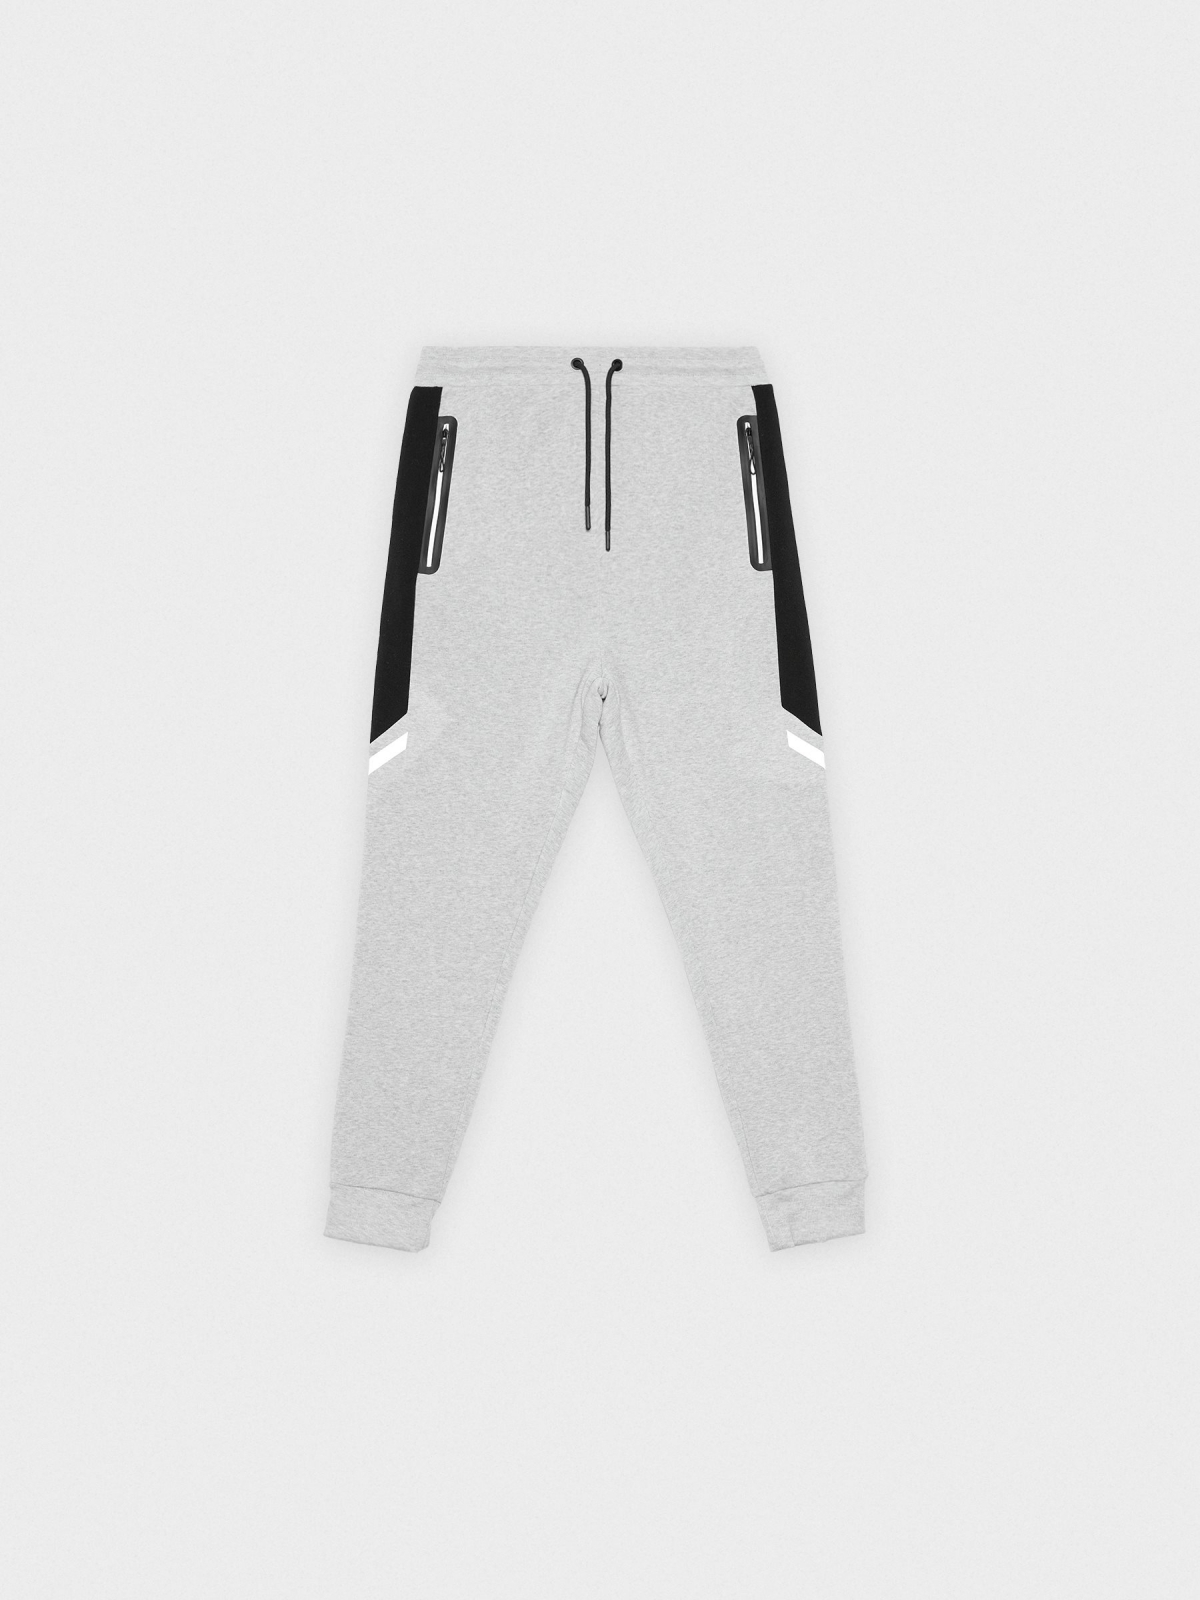  Sport jogger pants light grey